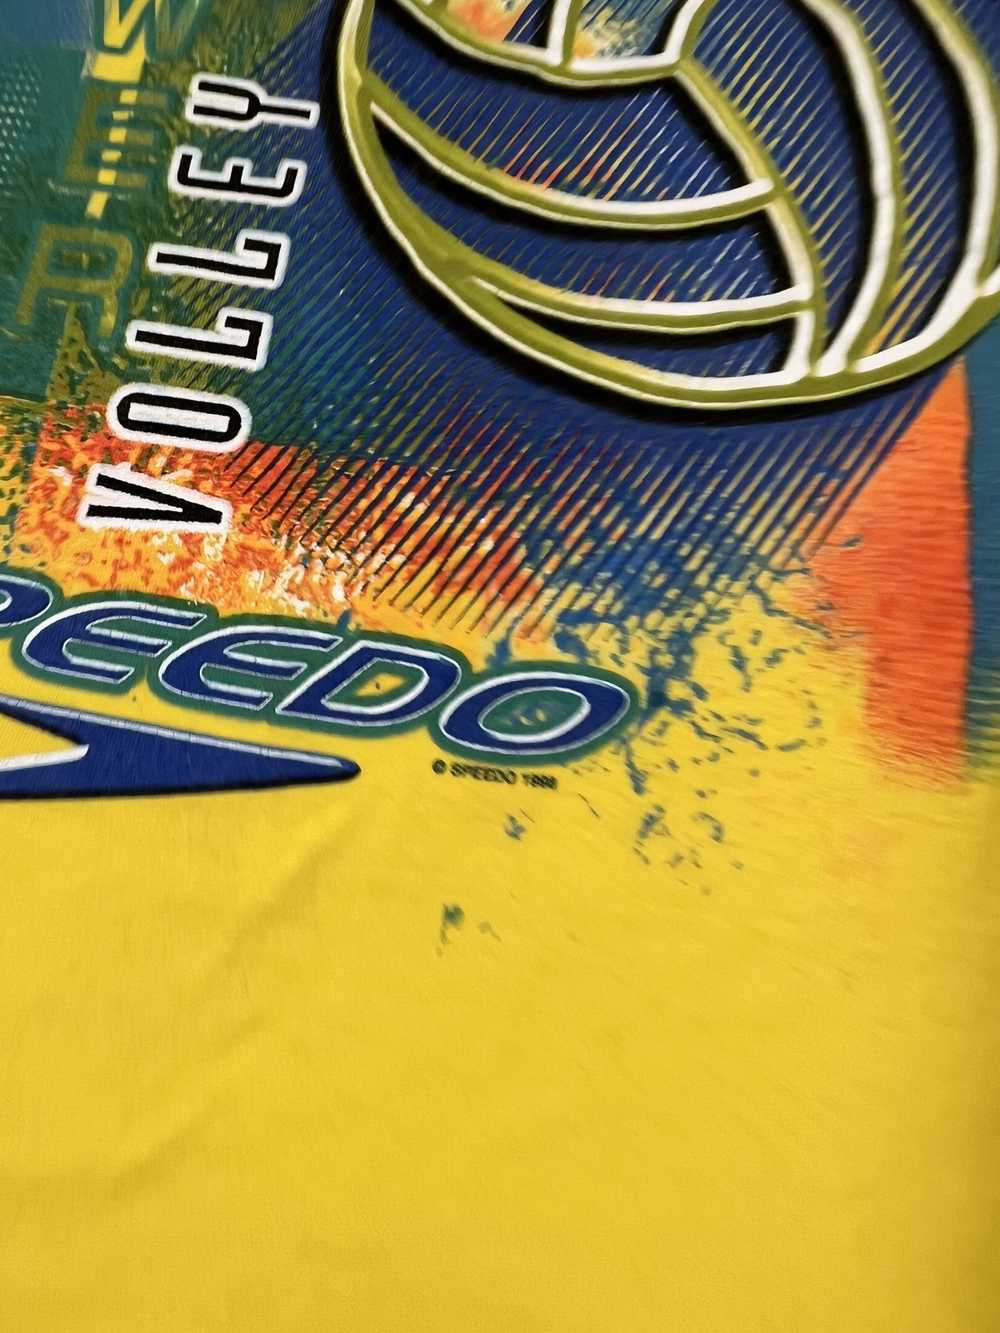 Speedo × Vintage Vintage Speedo Shirt - image 3